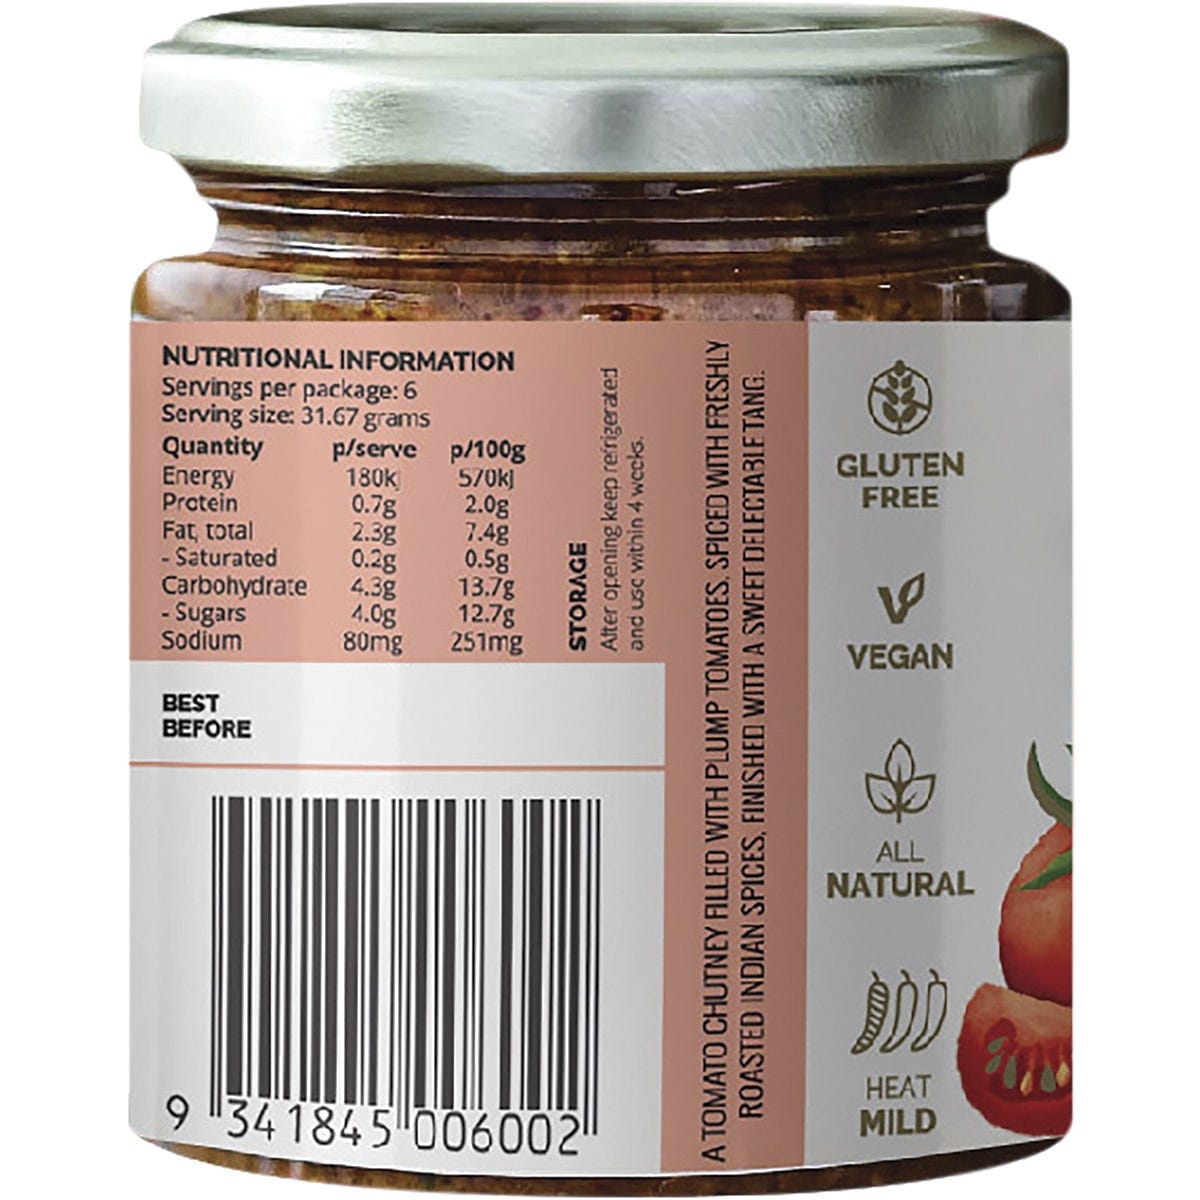 Turban Chopsticks Chutney Tomato 190g - Dr Earth - Condiments